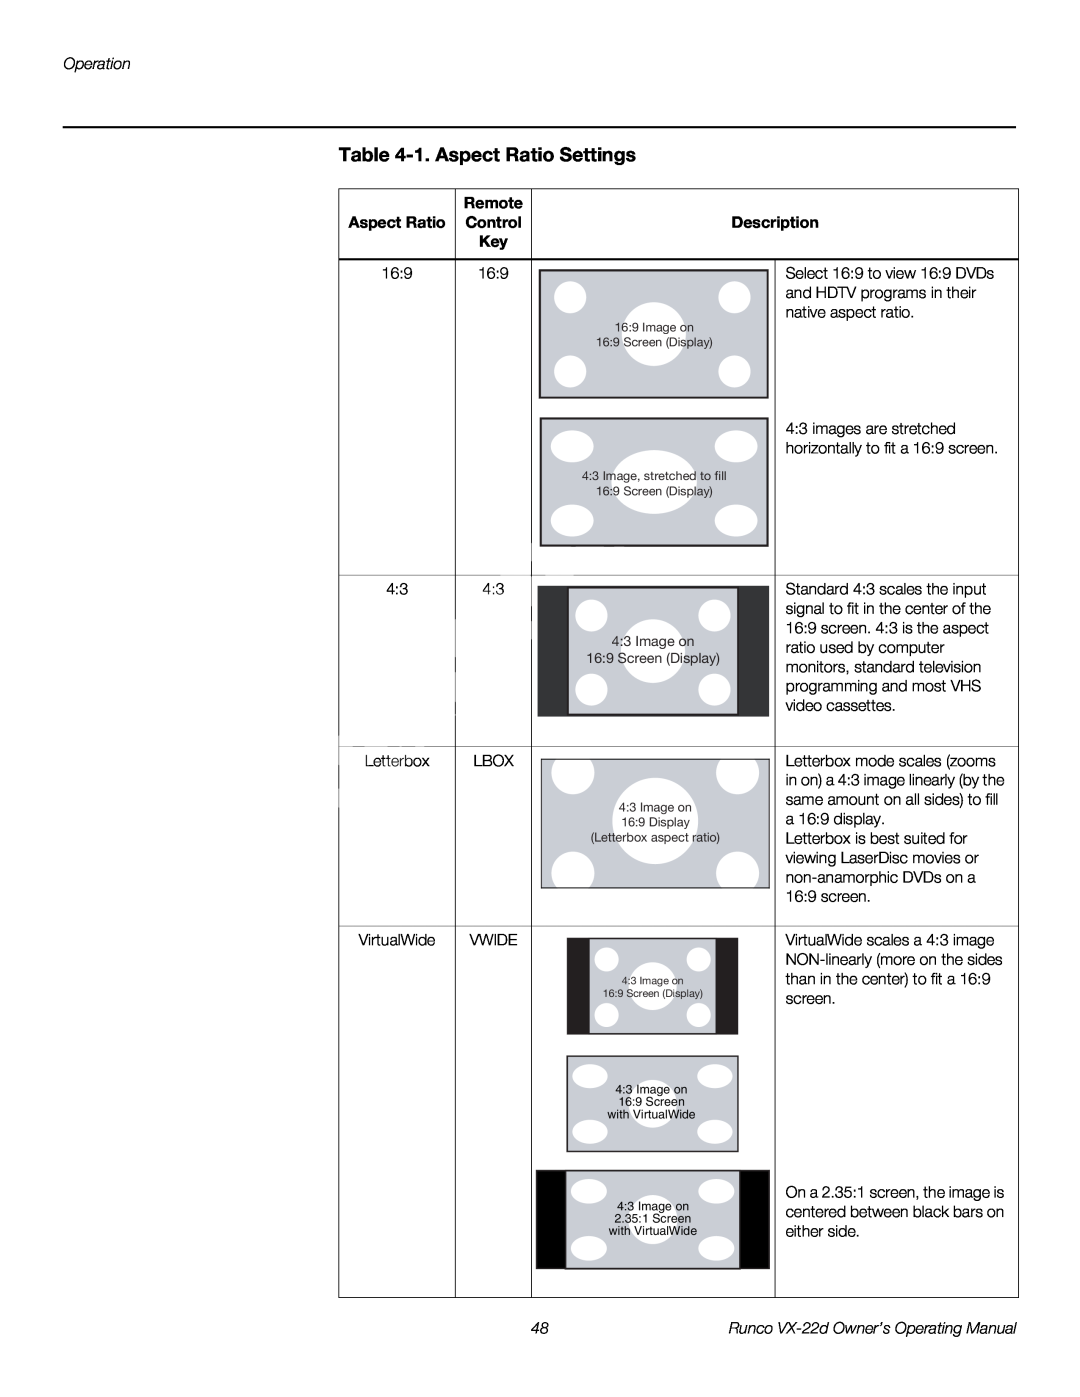 Runco VX-22D manual 1. Aspect Ratio Settings, Operation 